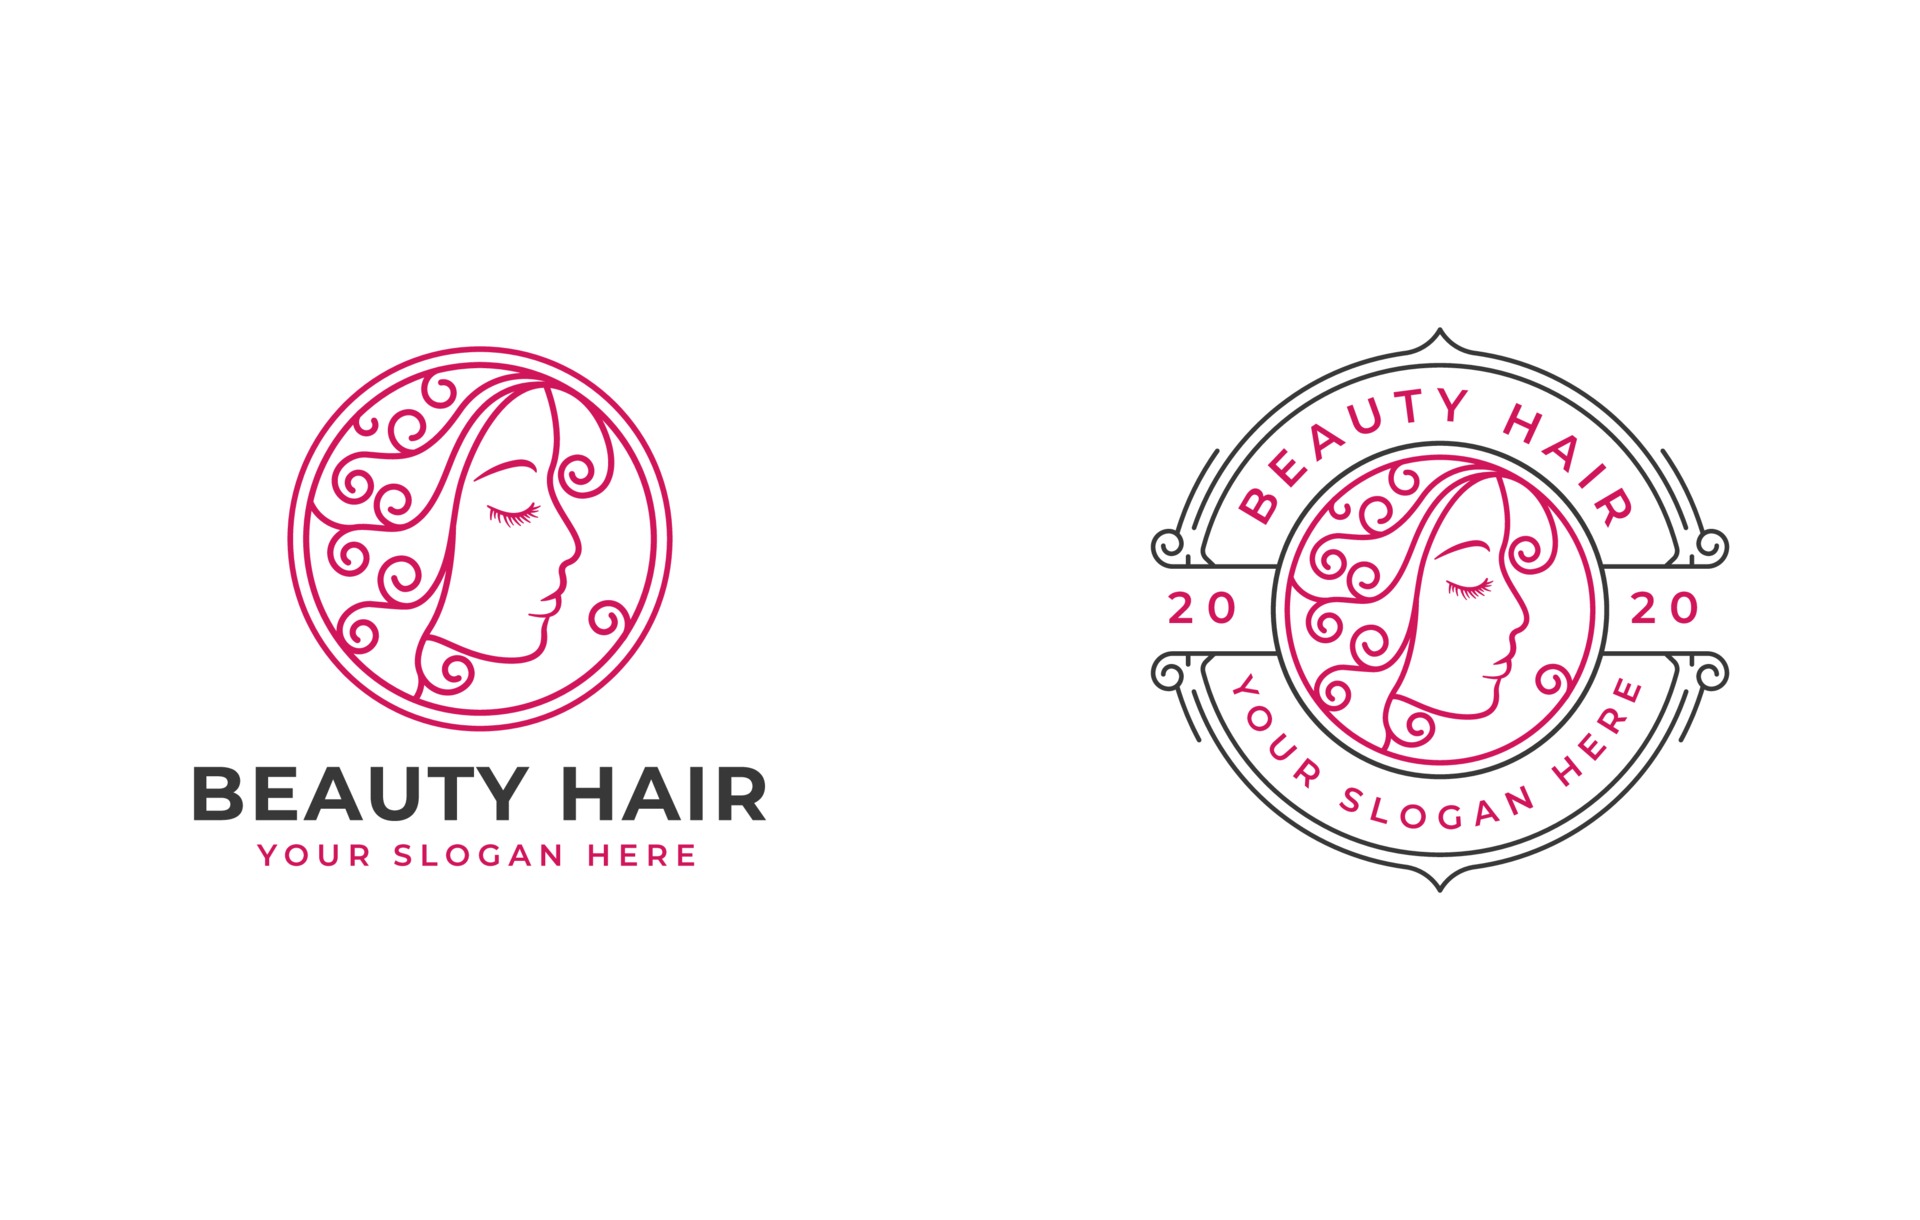 Beauty salon Woman Logo design with circle badge 3530819 Vector